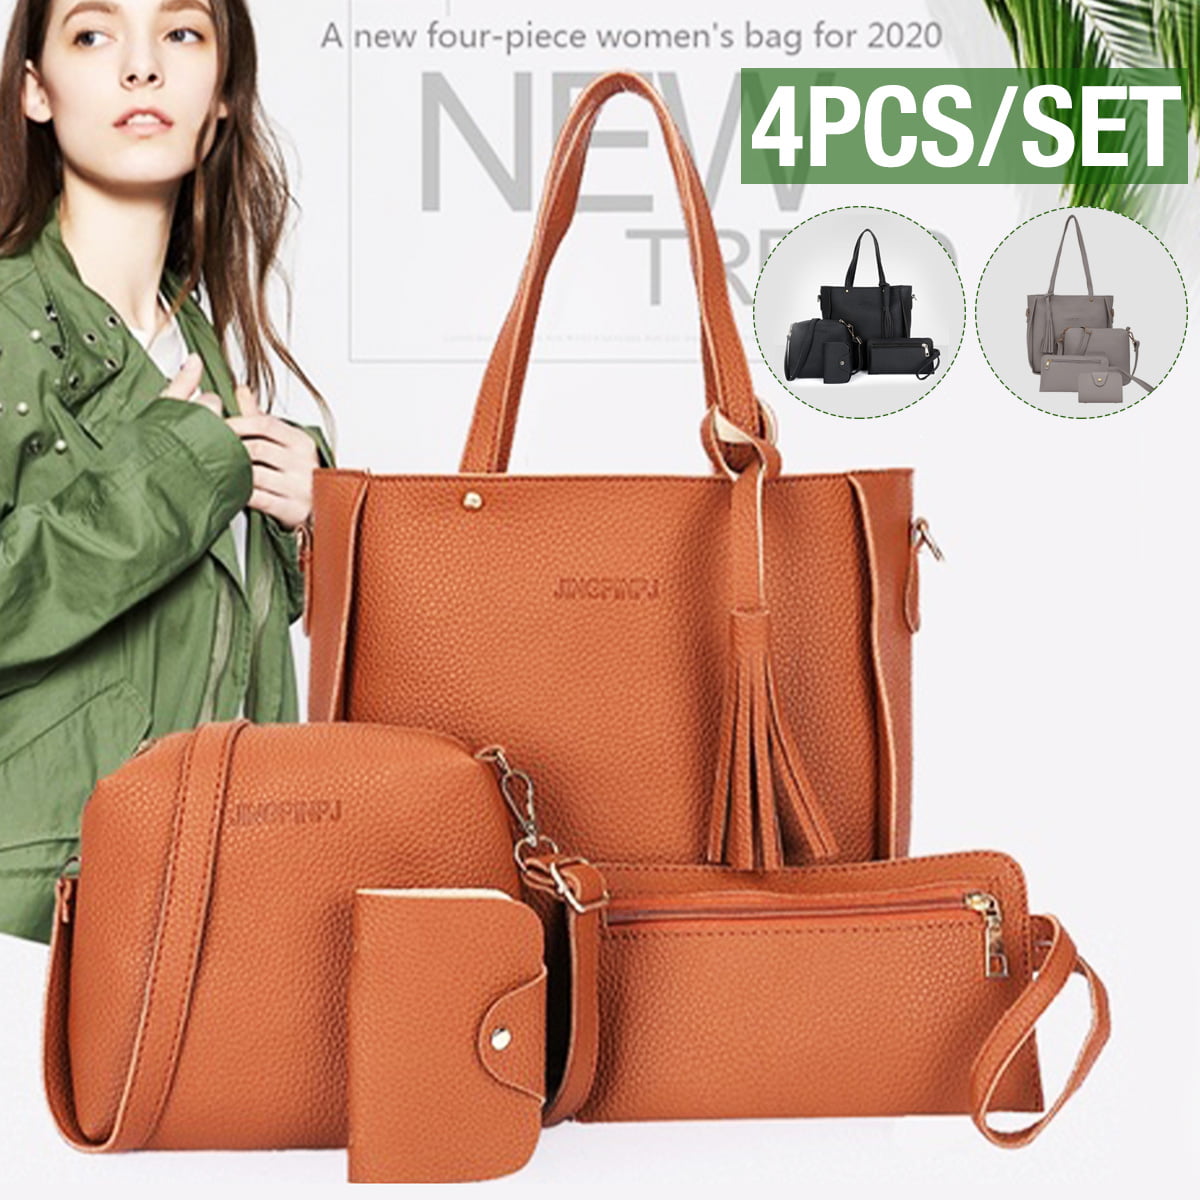 4pcs/set Women Ladies Leather Handbag Shoulder Tote Purse Satchel Messenger Bag 